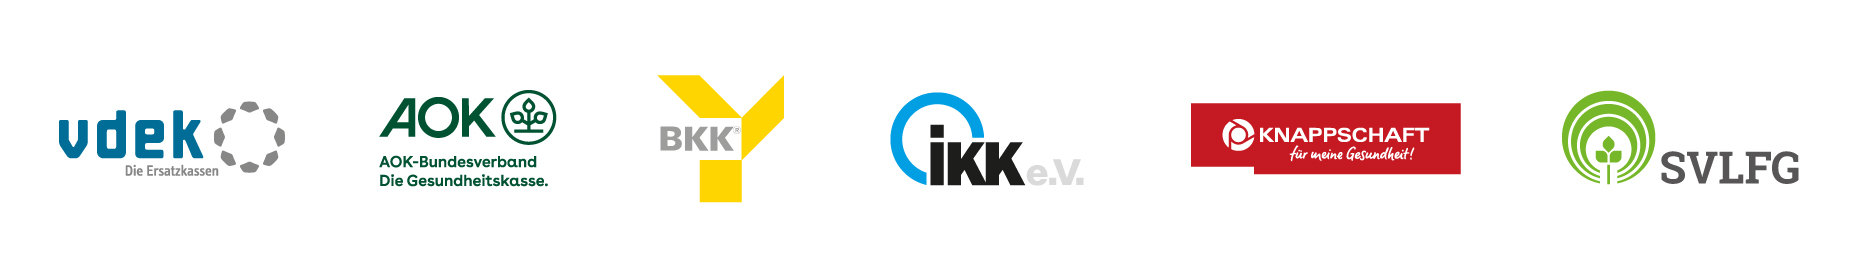 GKV-Gemeinschaftsförderung Logos